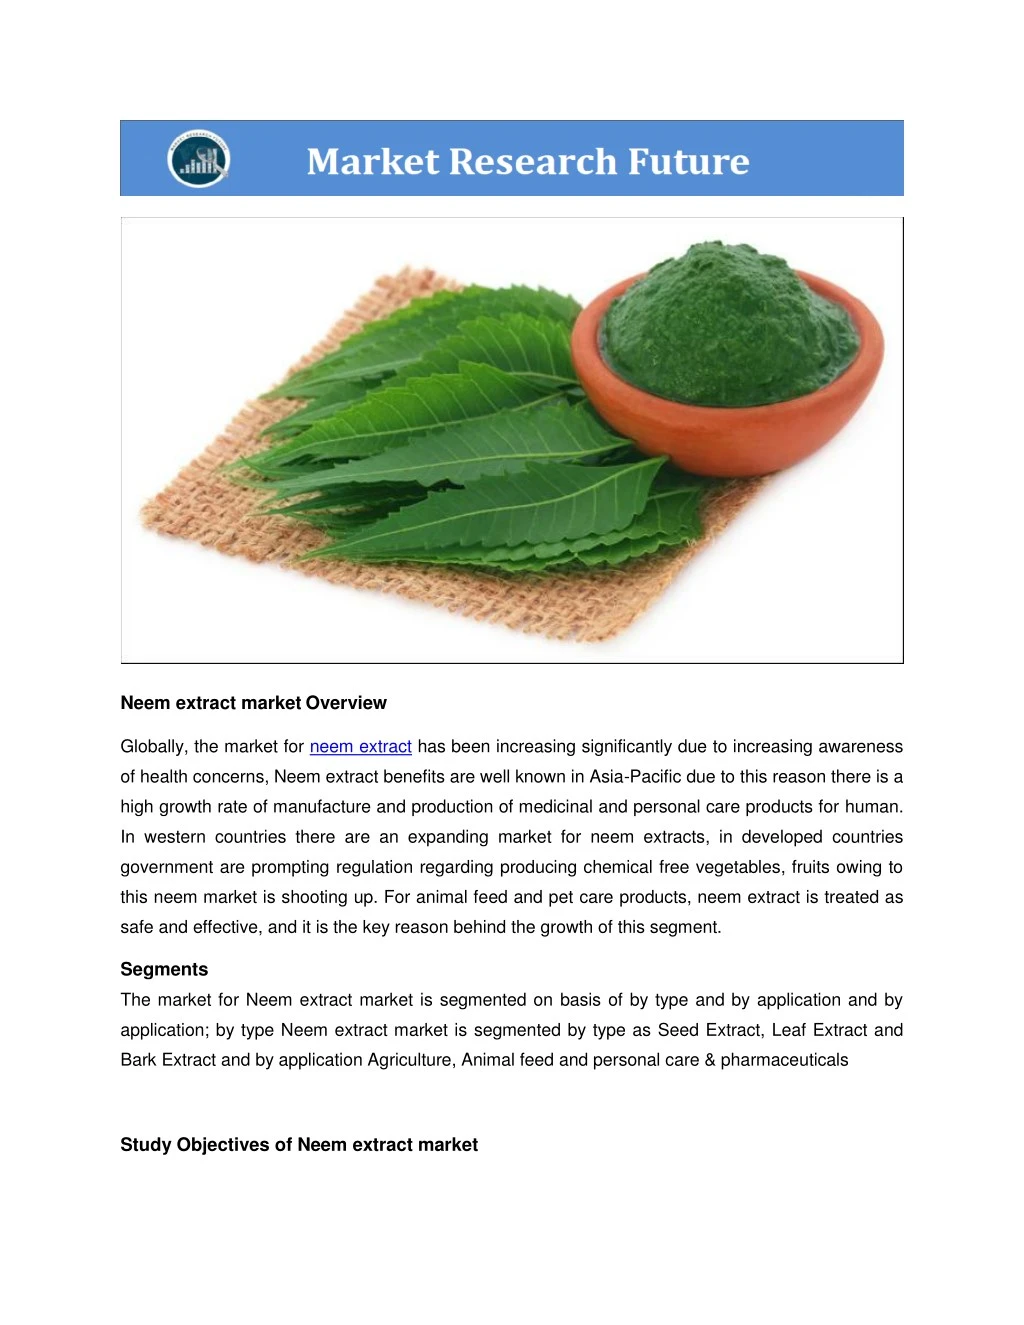 neem extract market overview